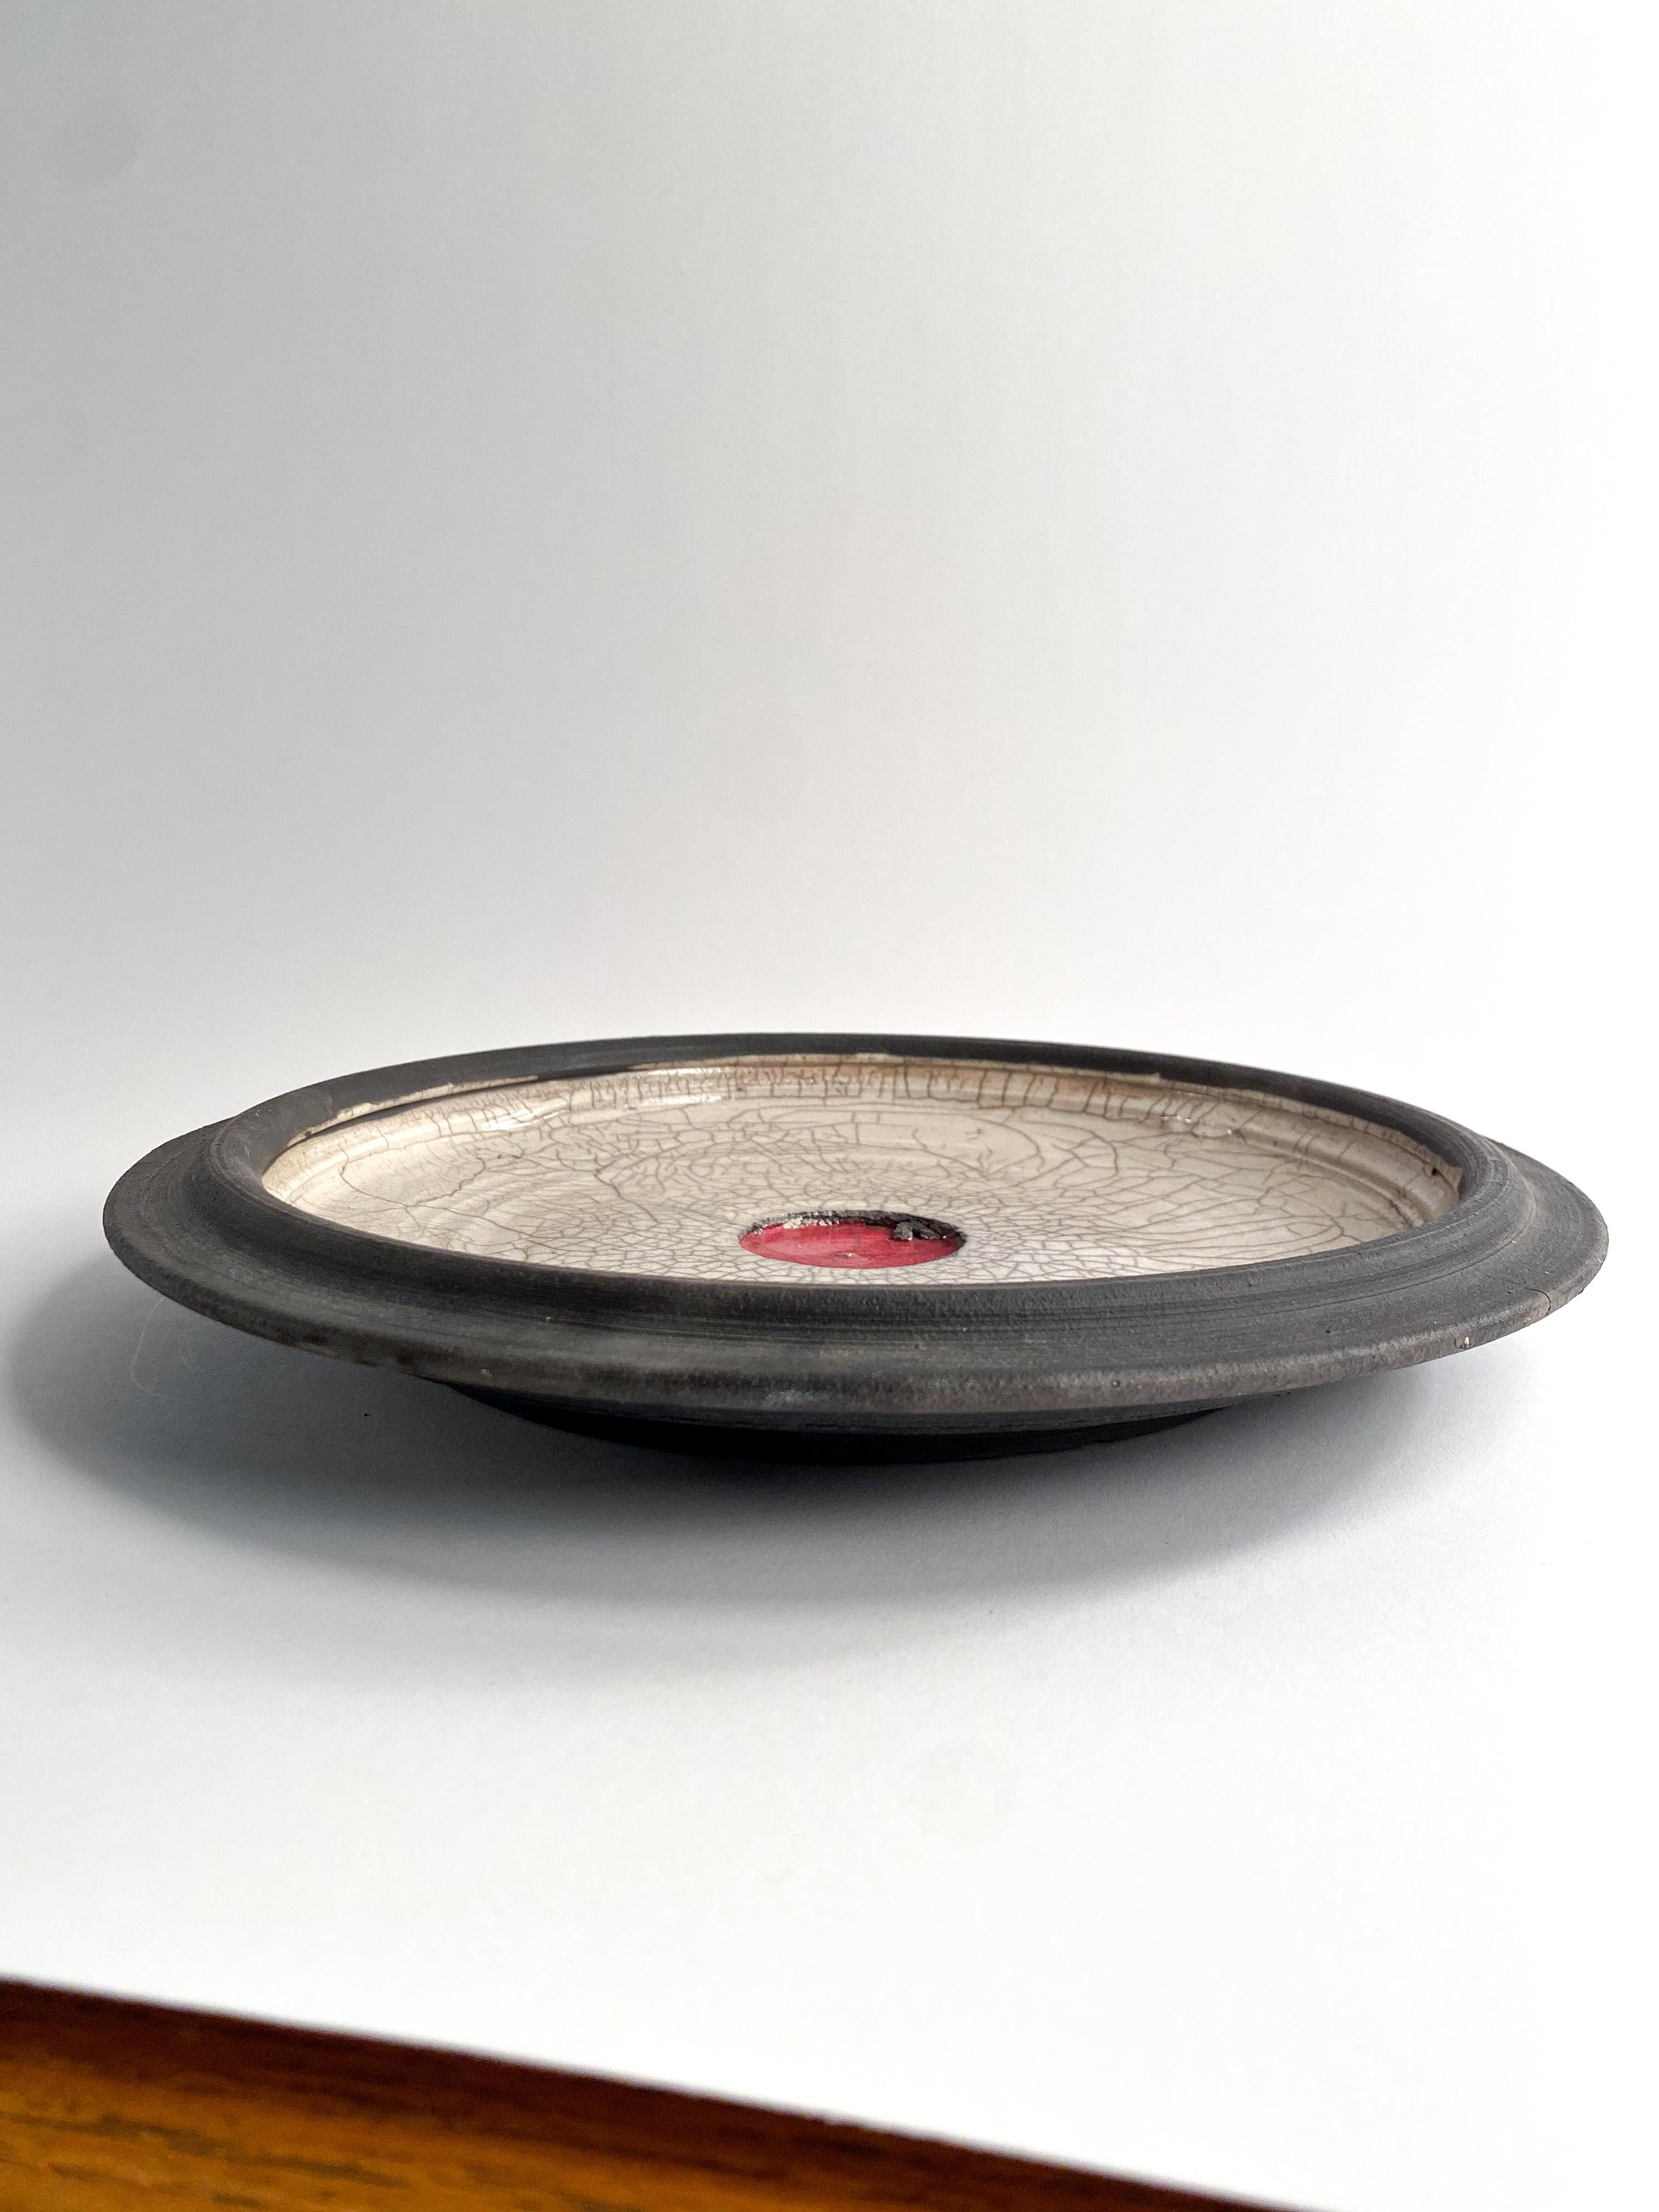 Studio Pottery Raku Display Platter In Good Condition For Sale In Philadelphia, PA